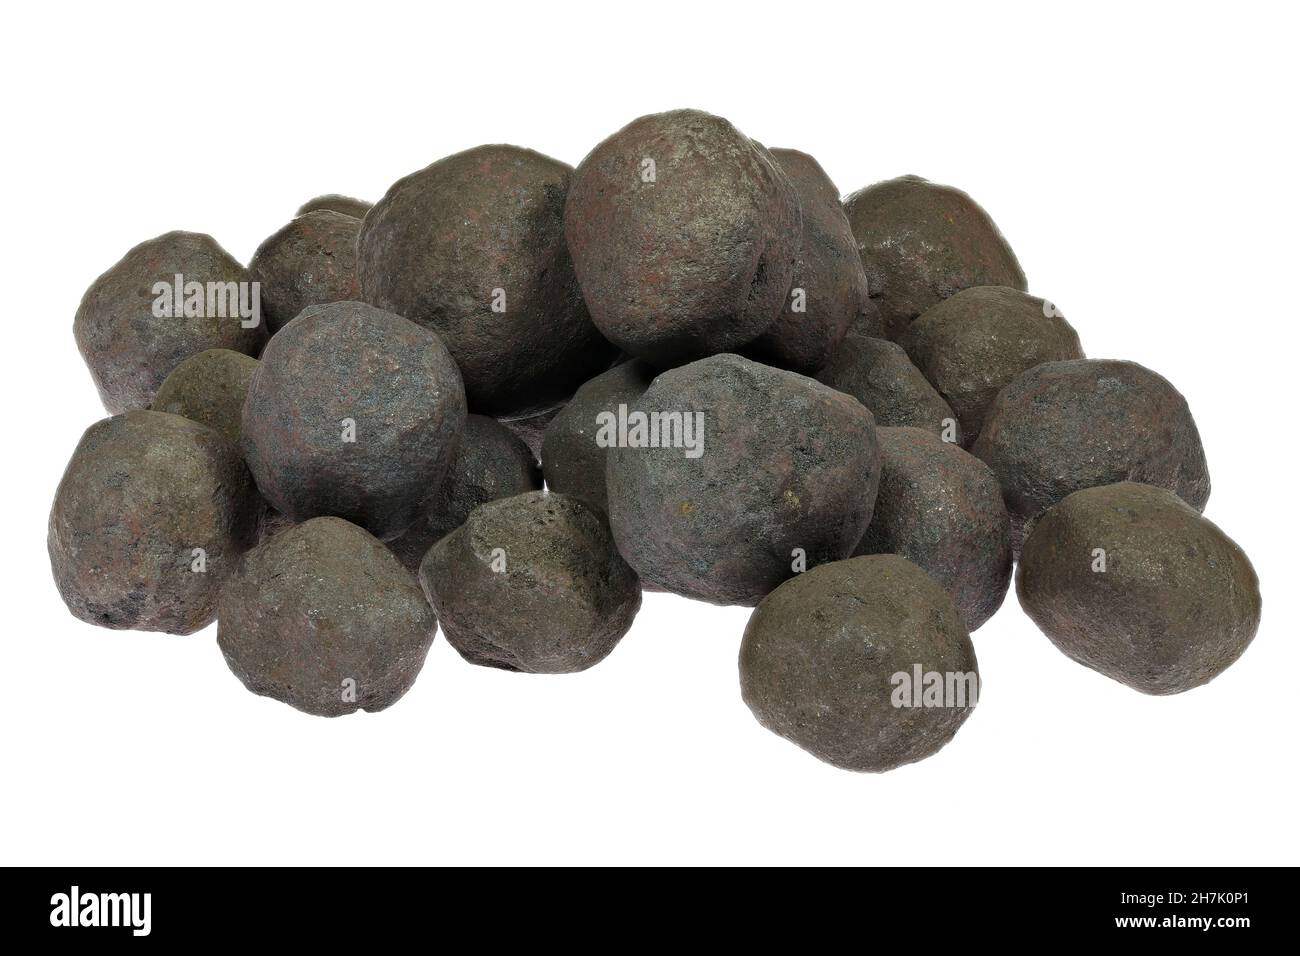 iron ore pellets from Kiruna, Sweden isolated on white background Stock Photo